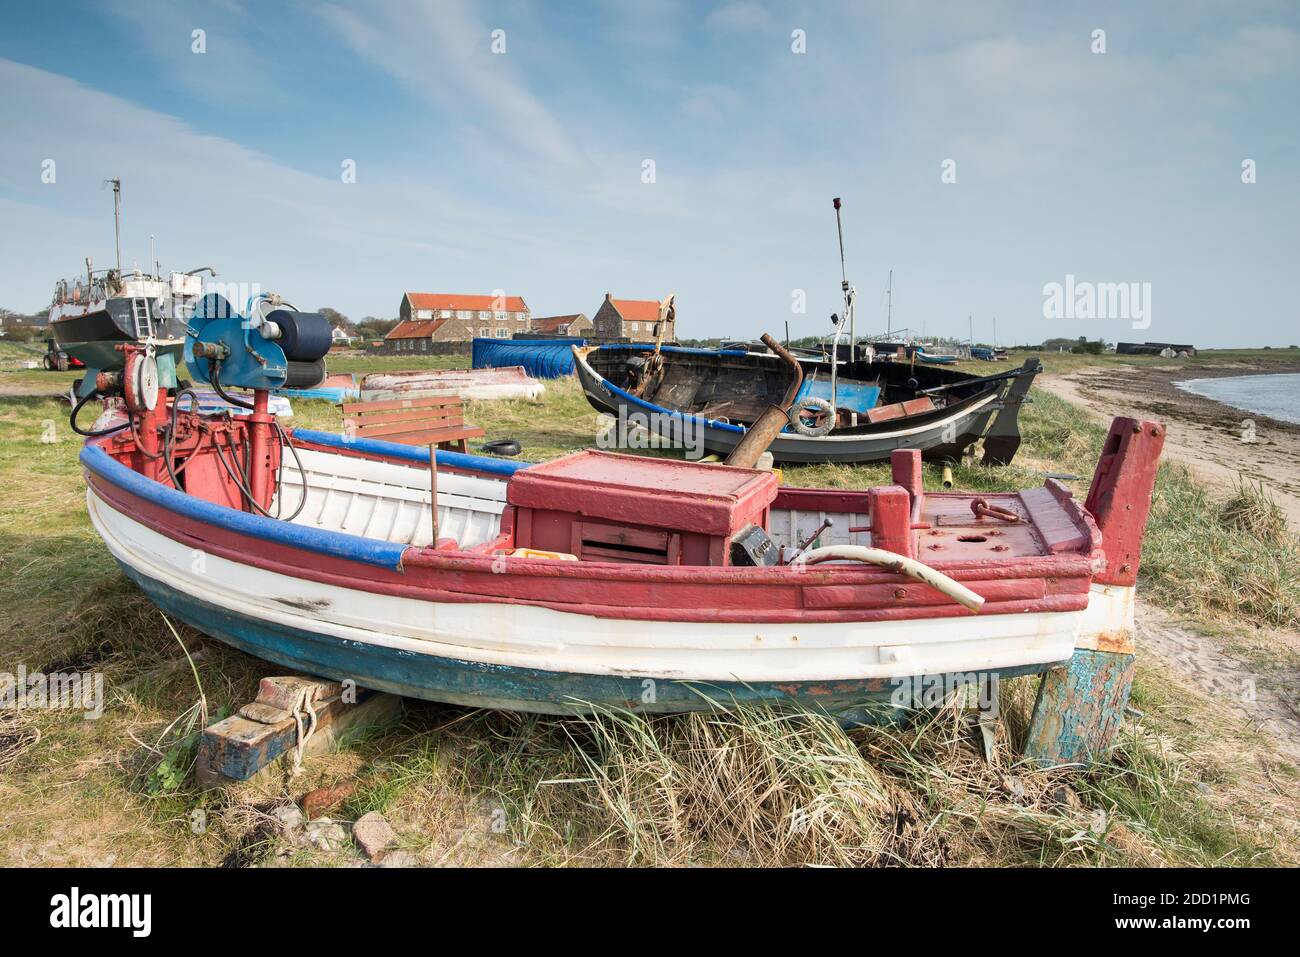 Fishing boats on the Holy island of Lindisfarne, England. Stock Photo